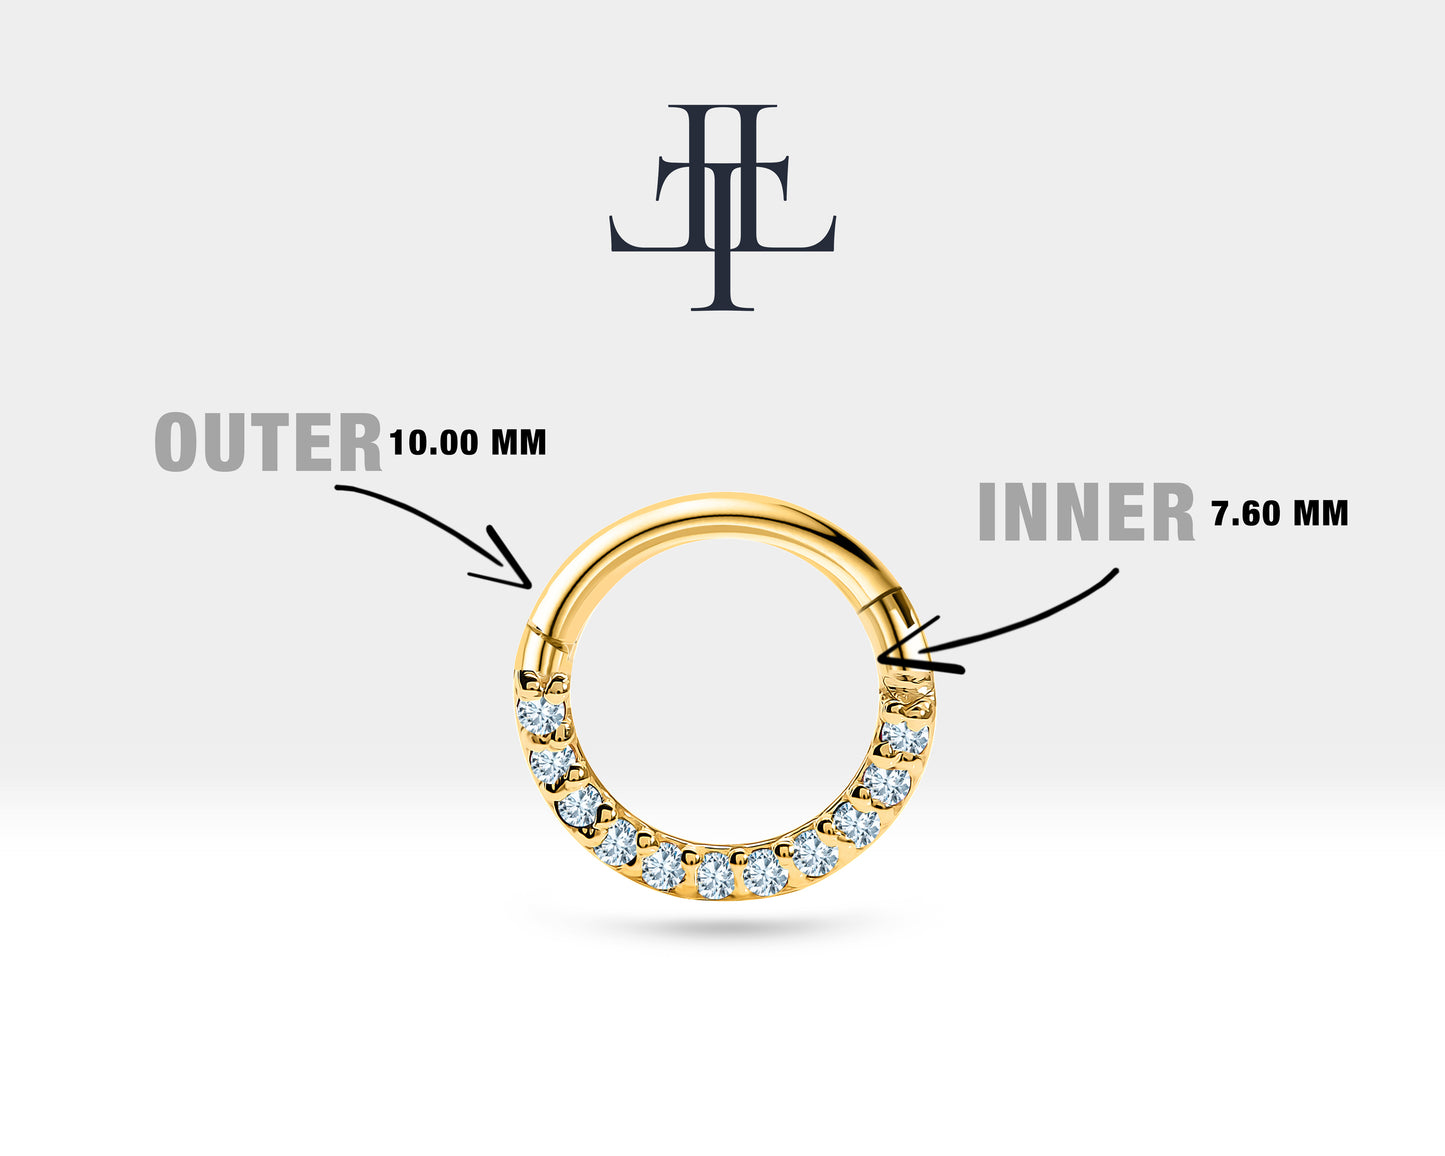 Cartilage Hoop Sequencing Design Diamond Clicker Piercing,Single Earring,14K Gold,16G(1.2mm)